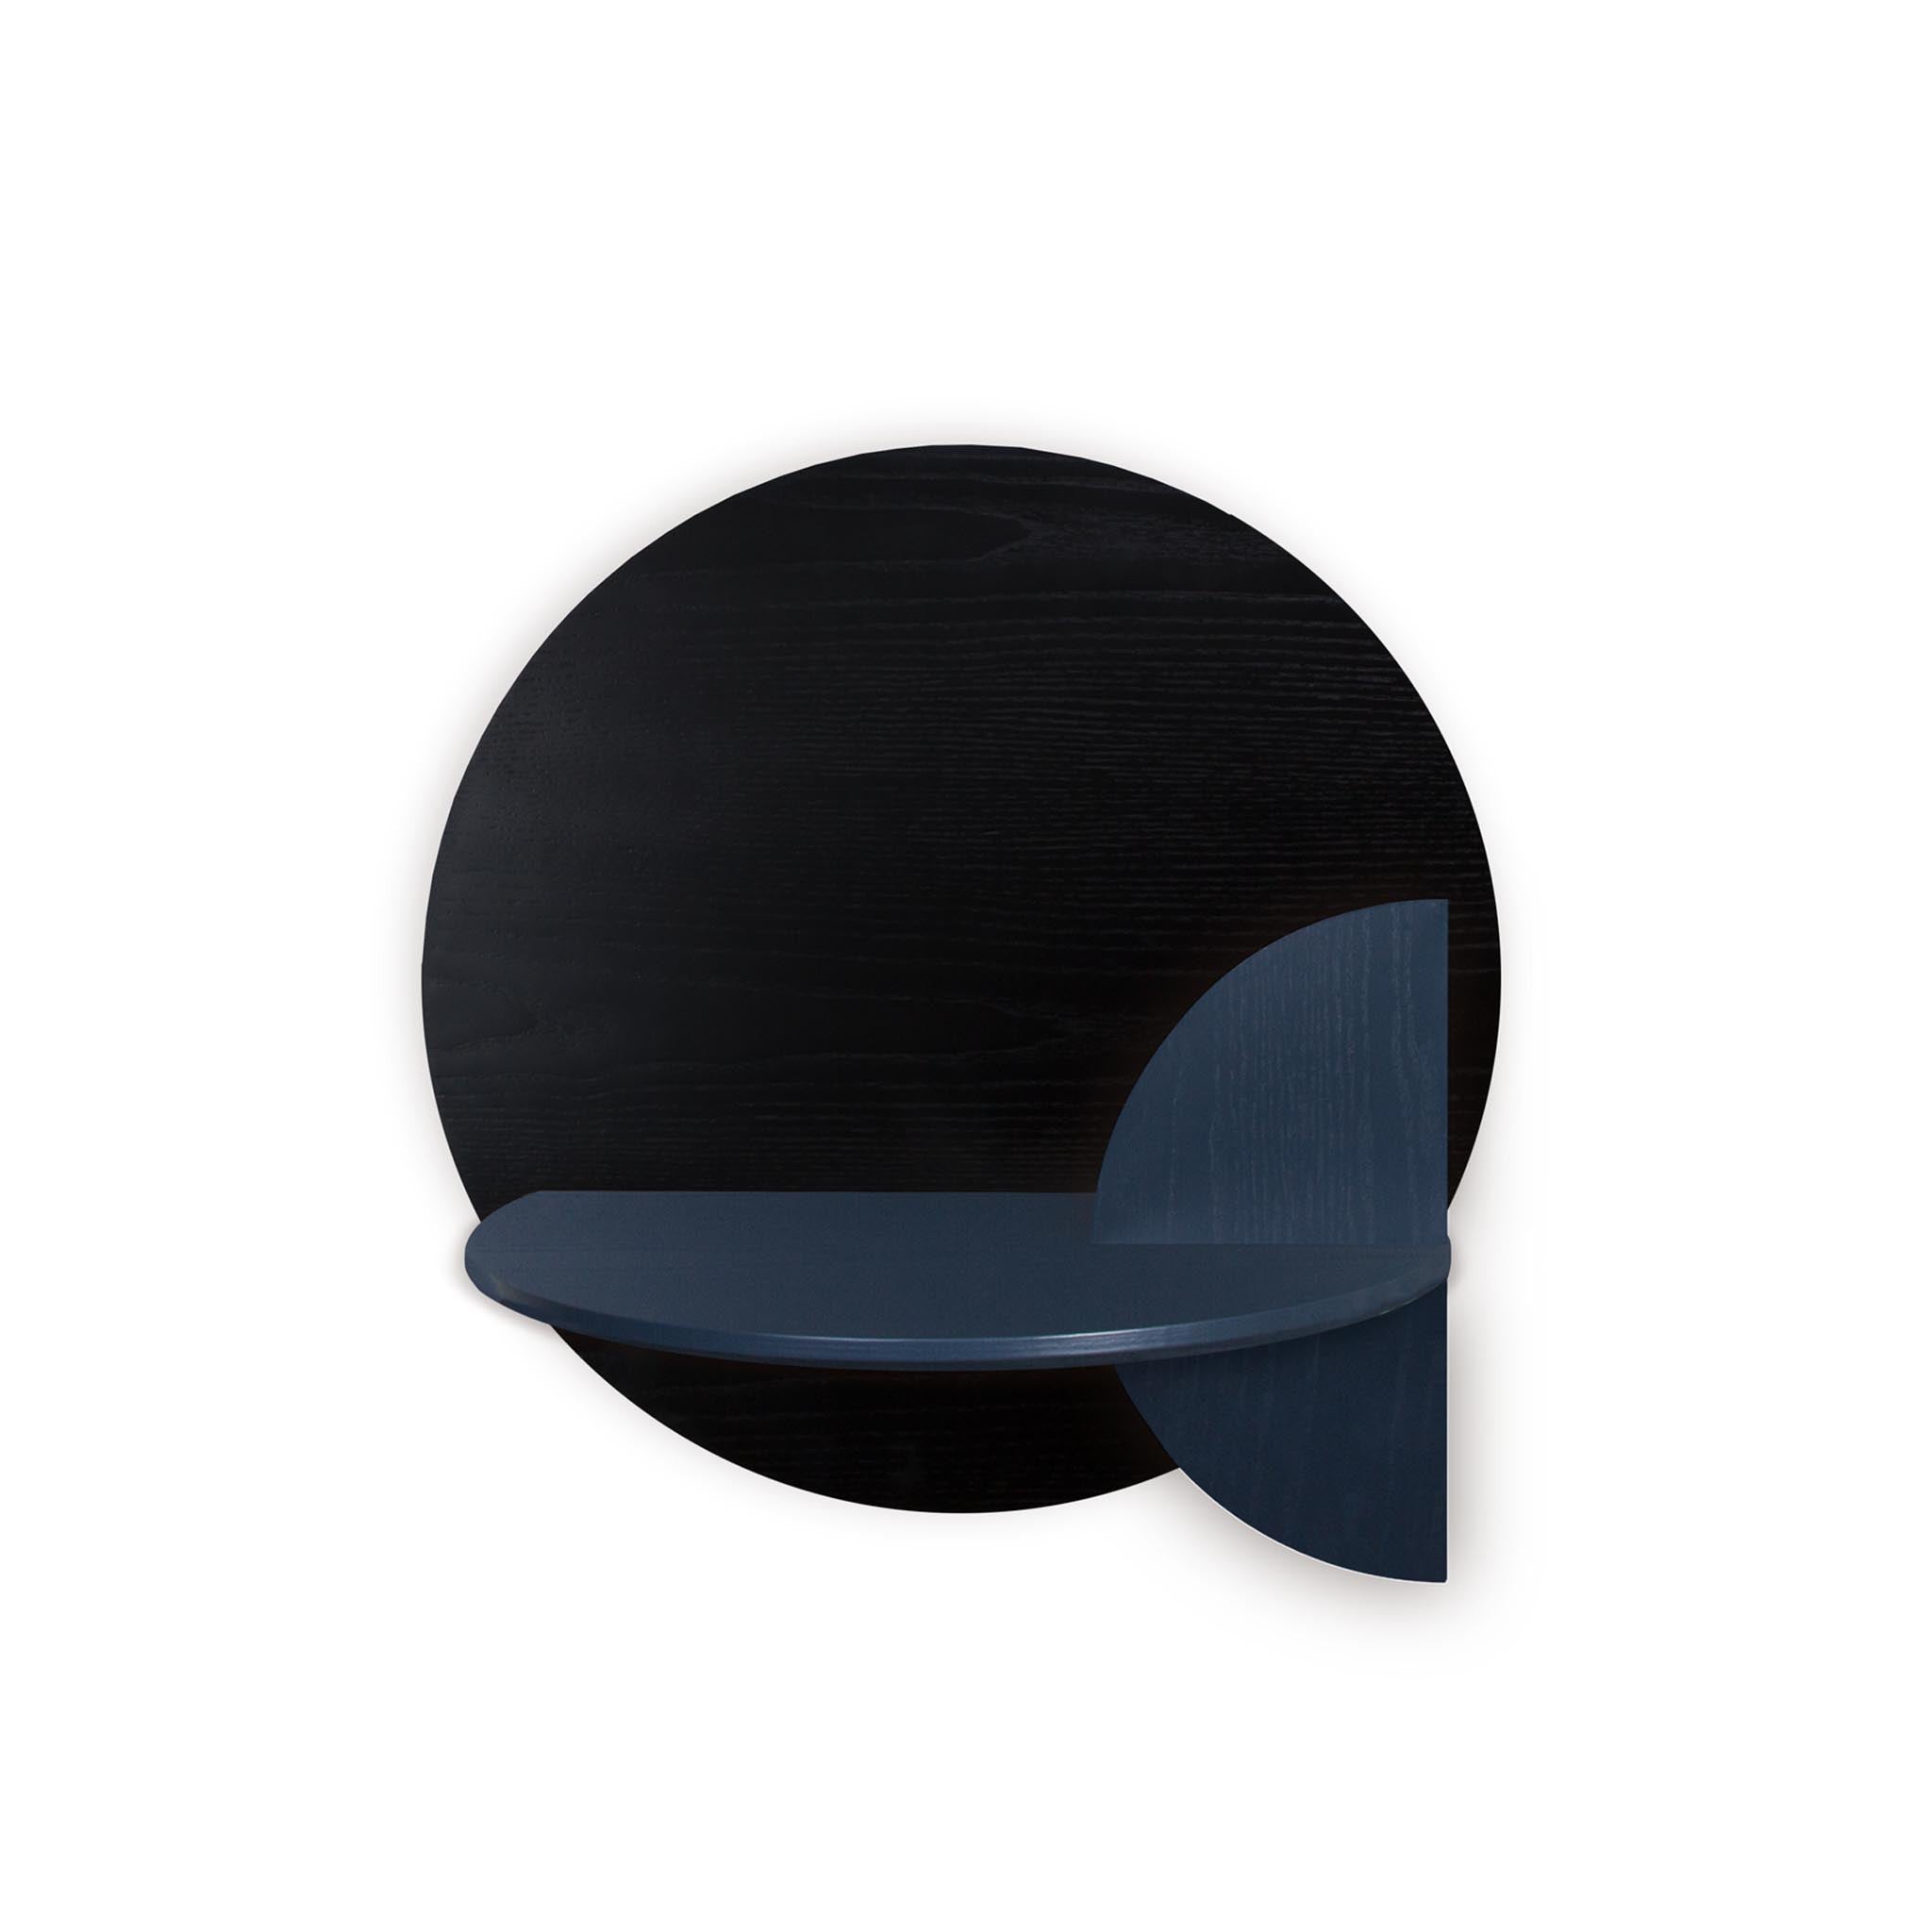 Alba floating nightstand DUO · Black circle